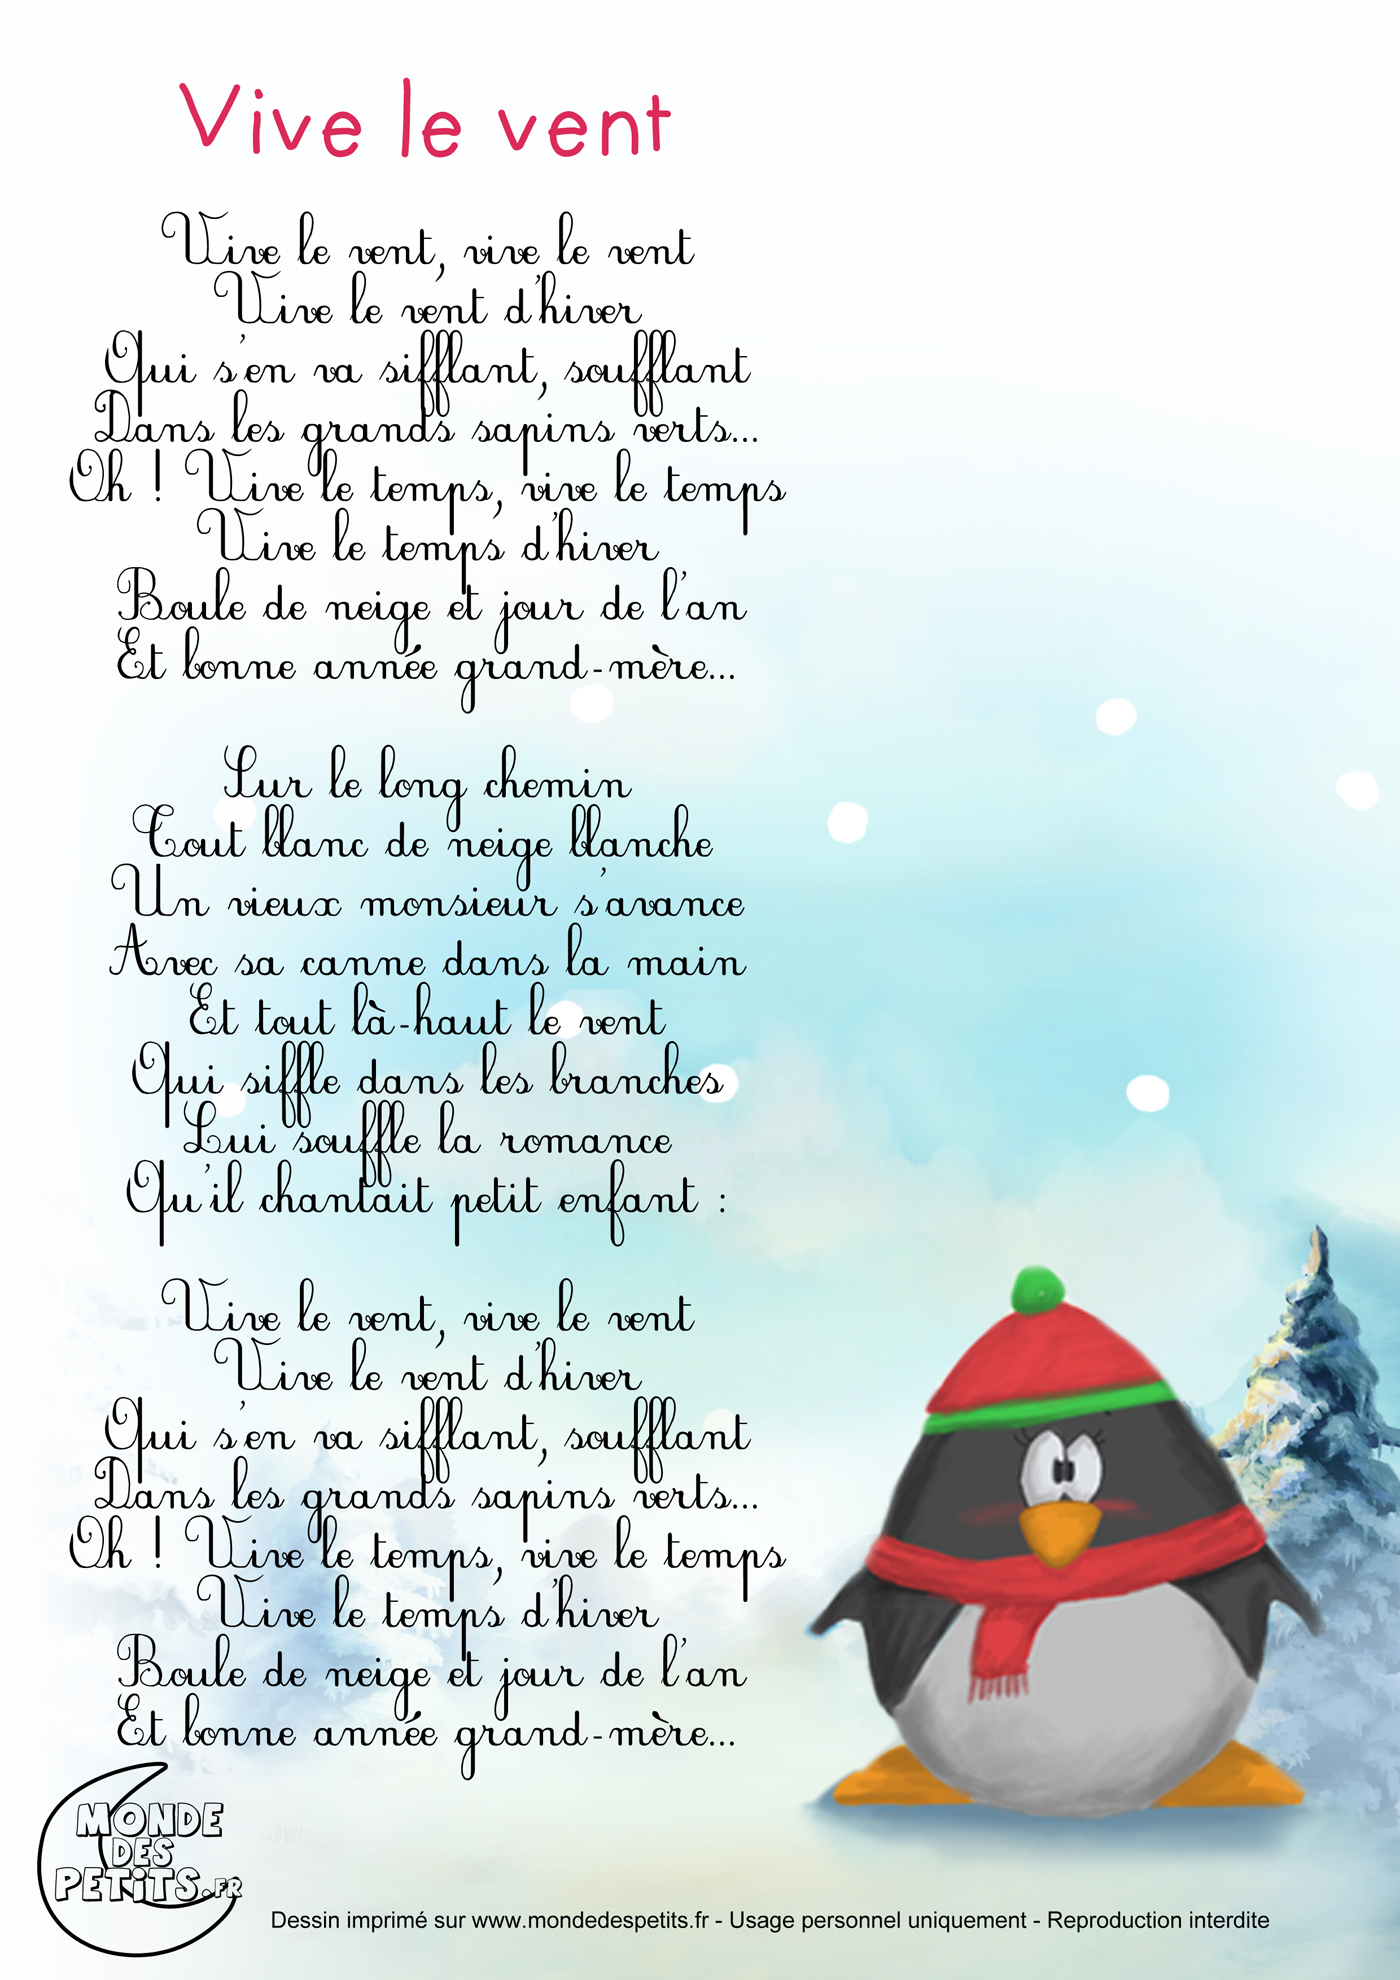 Vive le vent d'hiver - song and lyrics by Petit Papa Noël